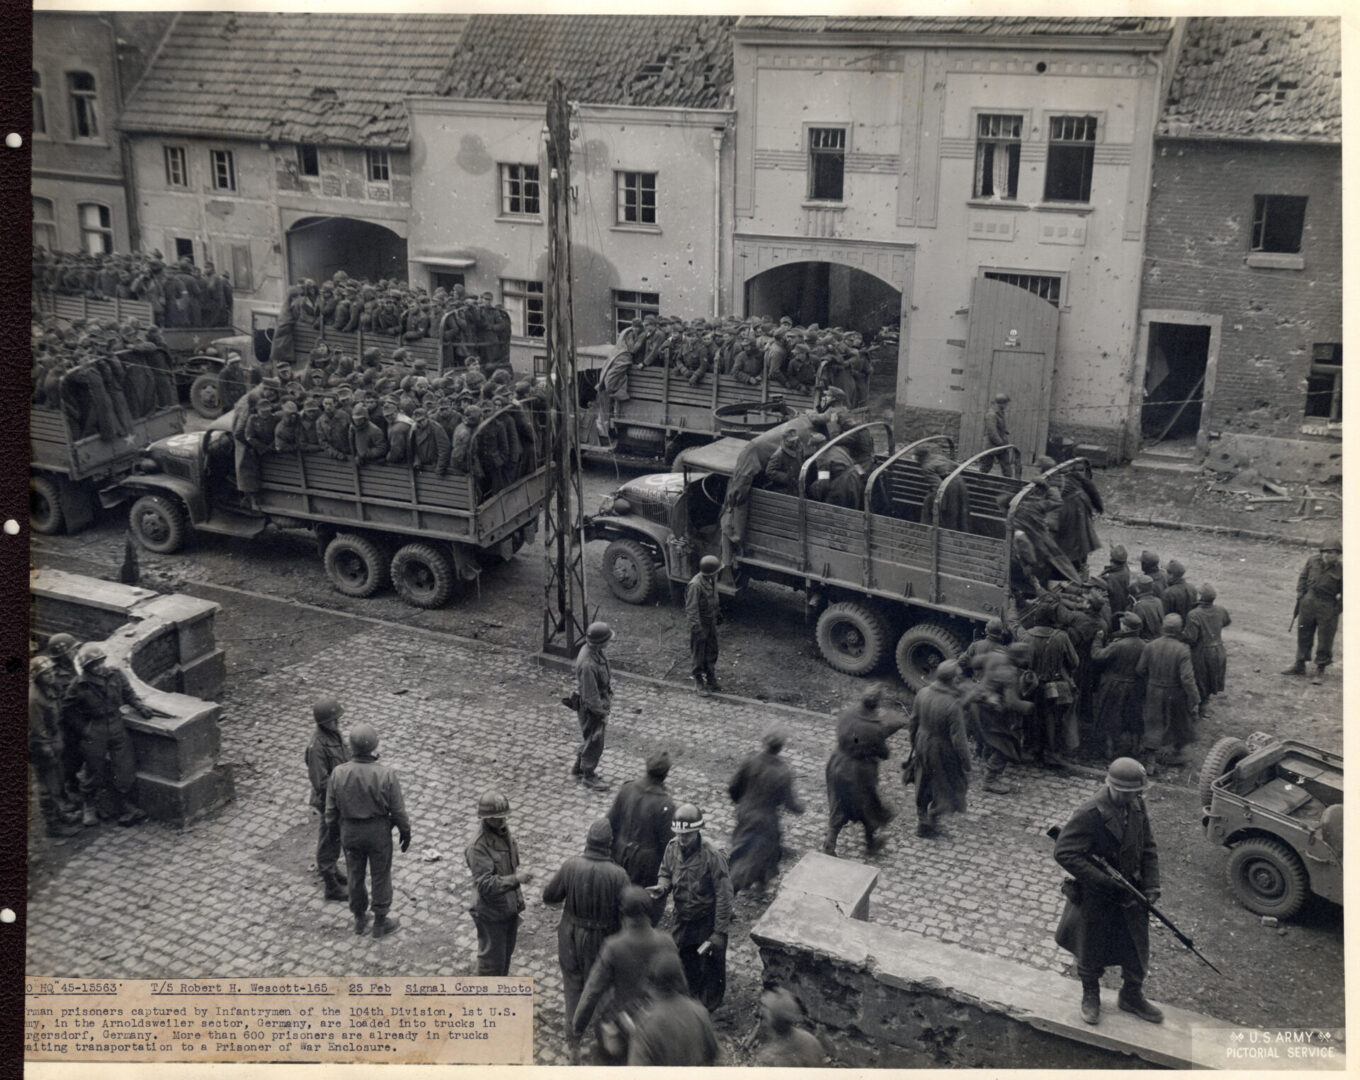 German prisoners of war being loaded into trucks